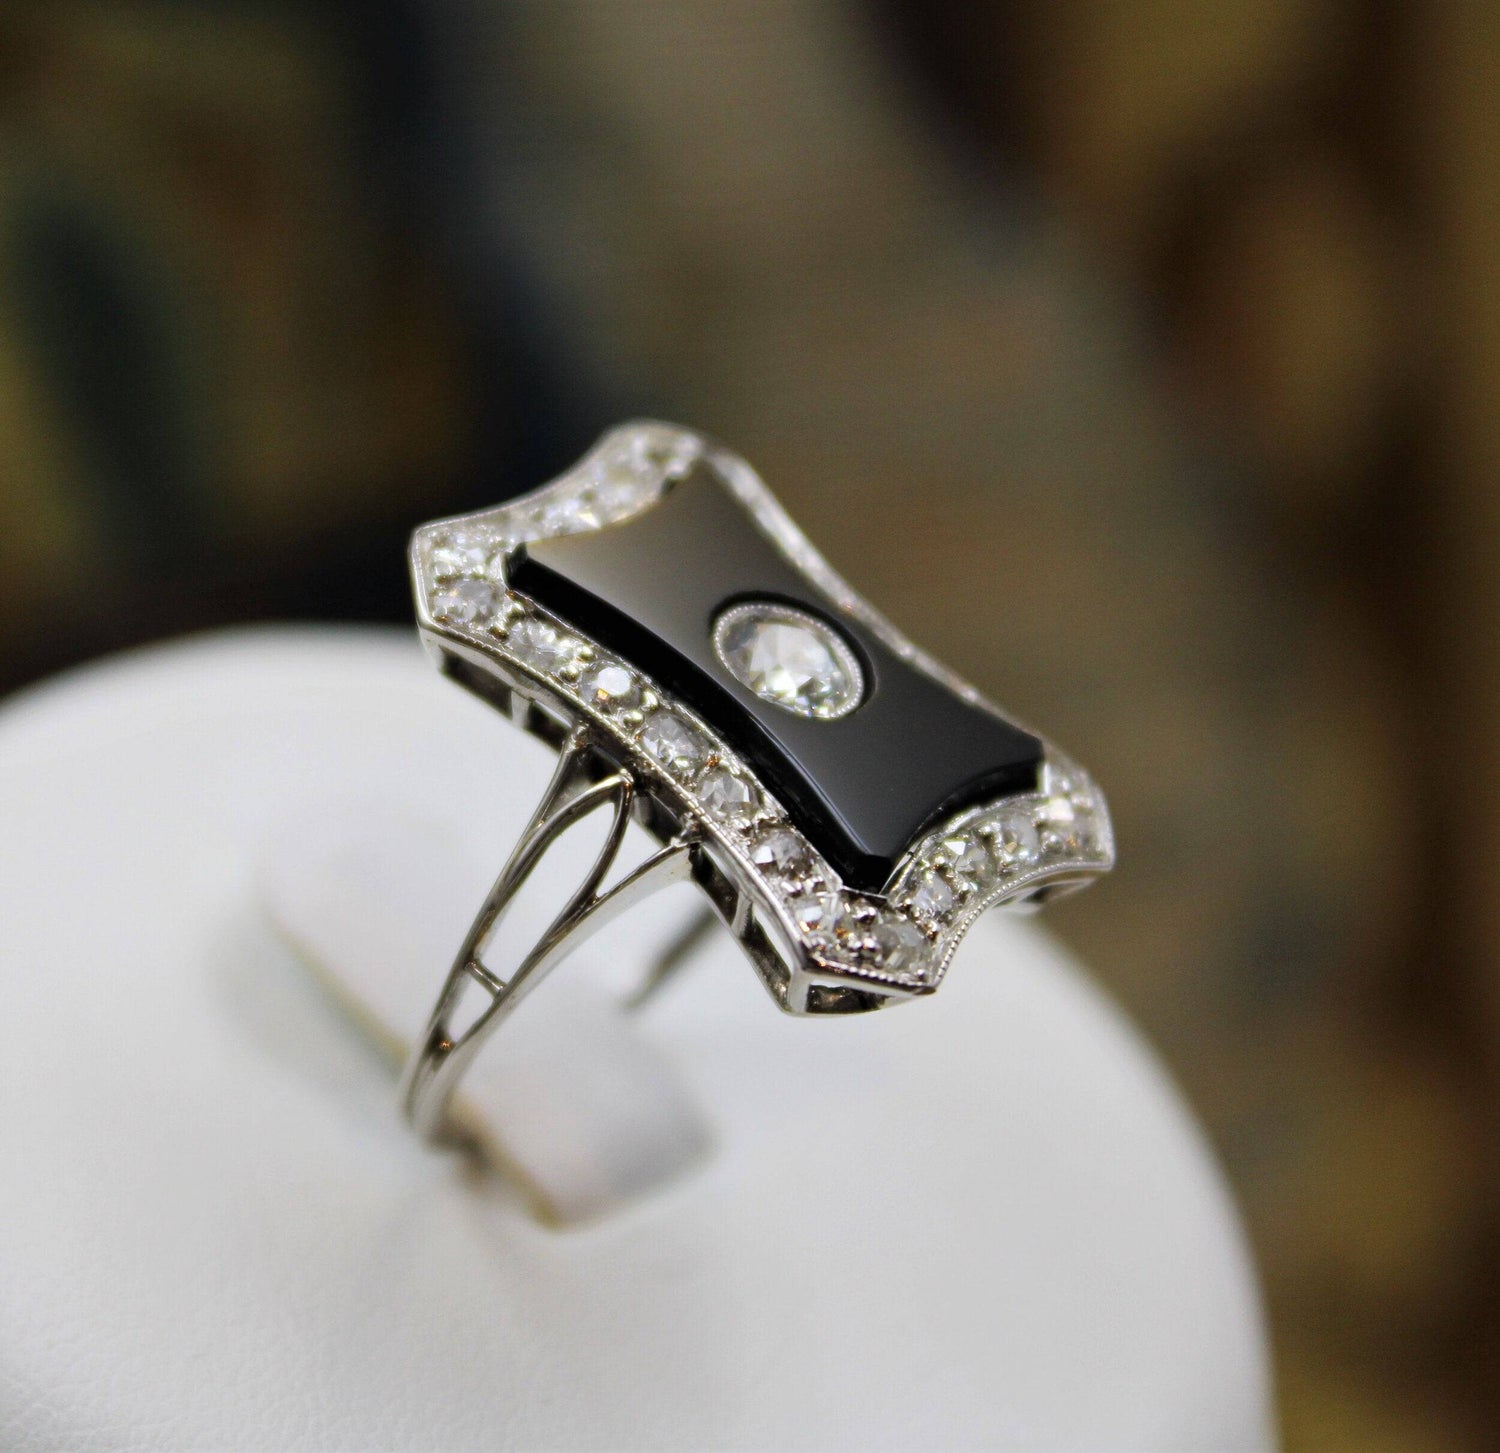 An exquisite Art Deco Black Onyx & Diamond "Plaque" Ring set in Platinum, Circa 1930 - Robin Haydock Antiques